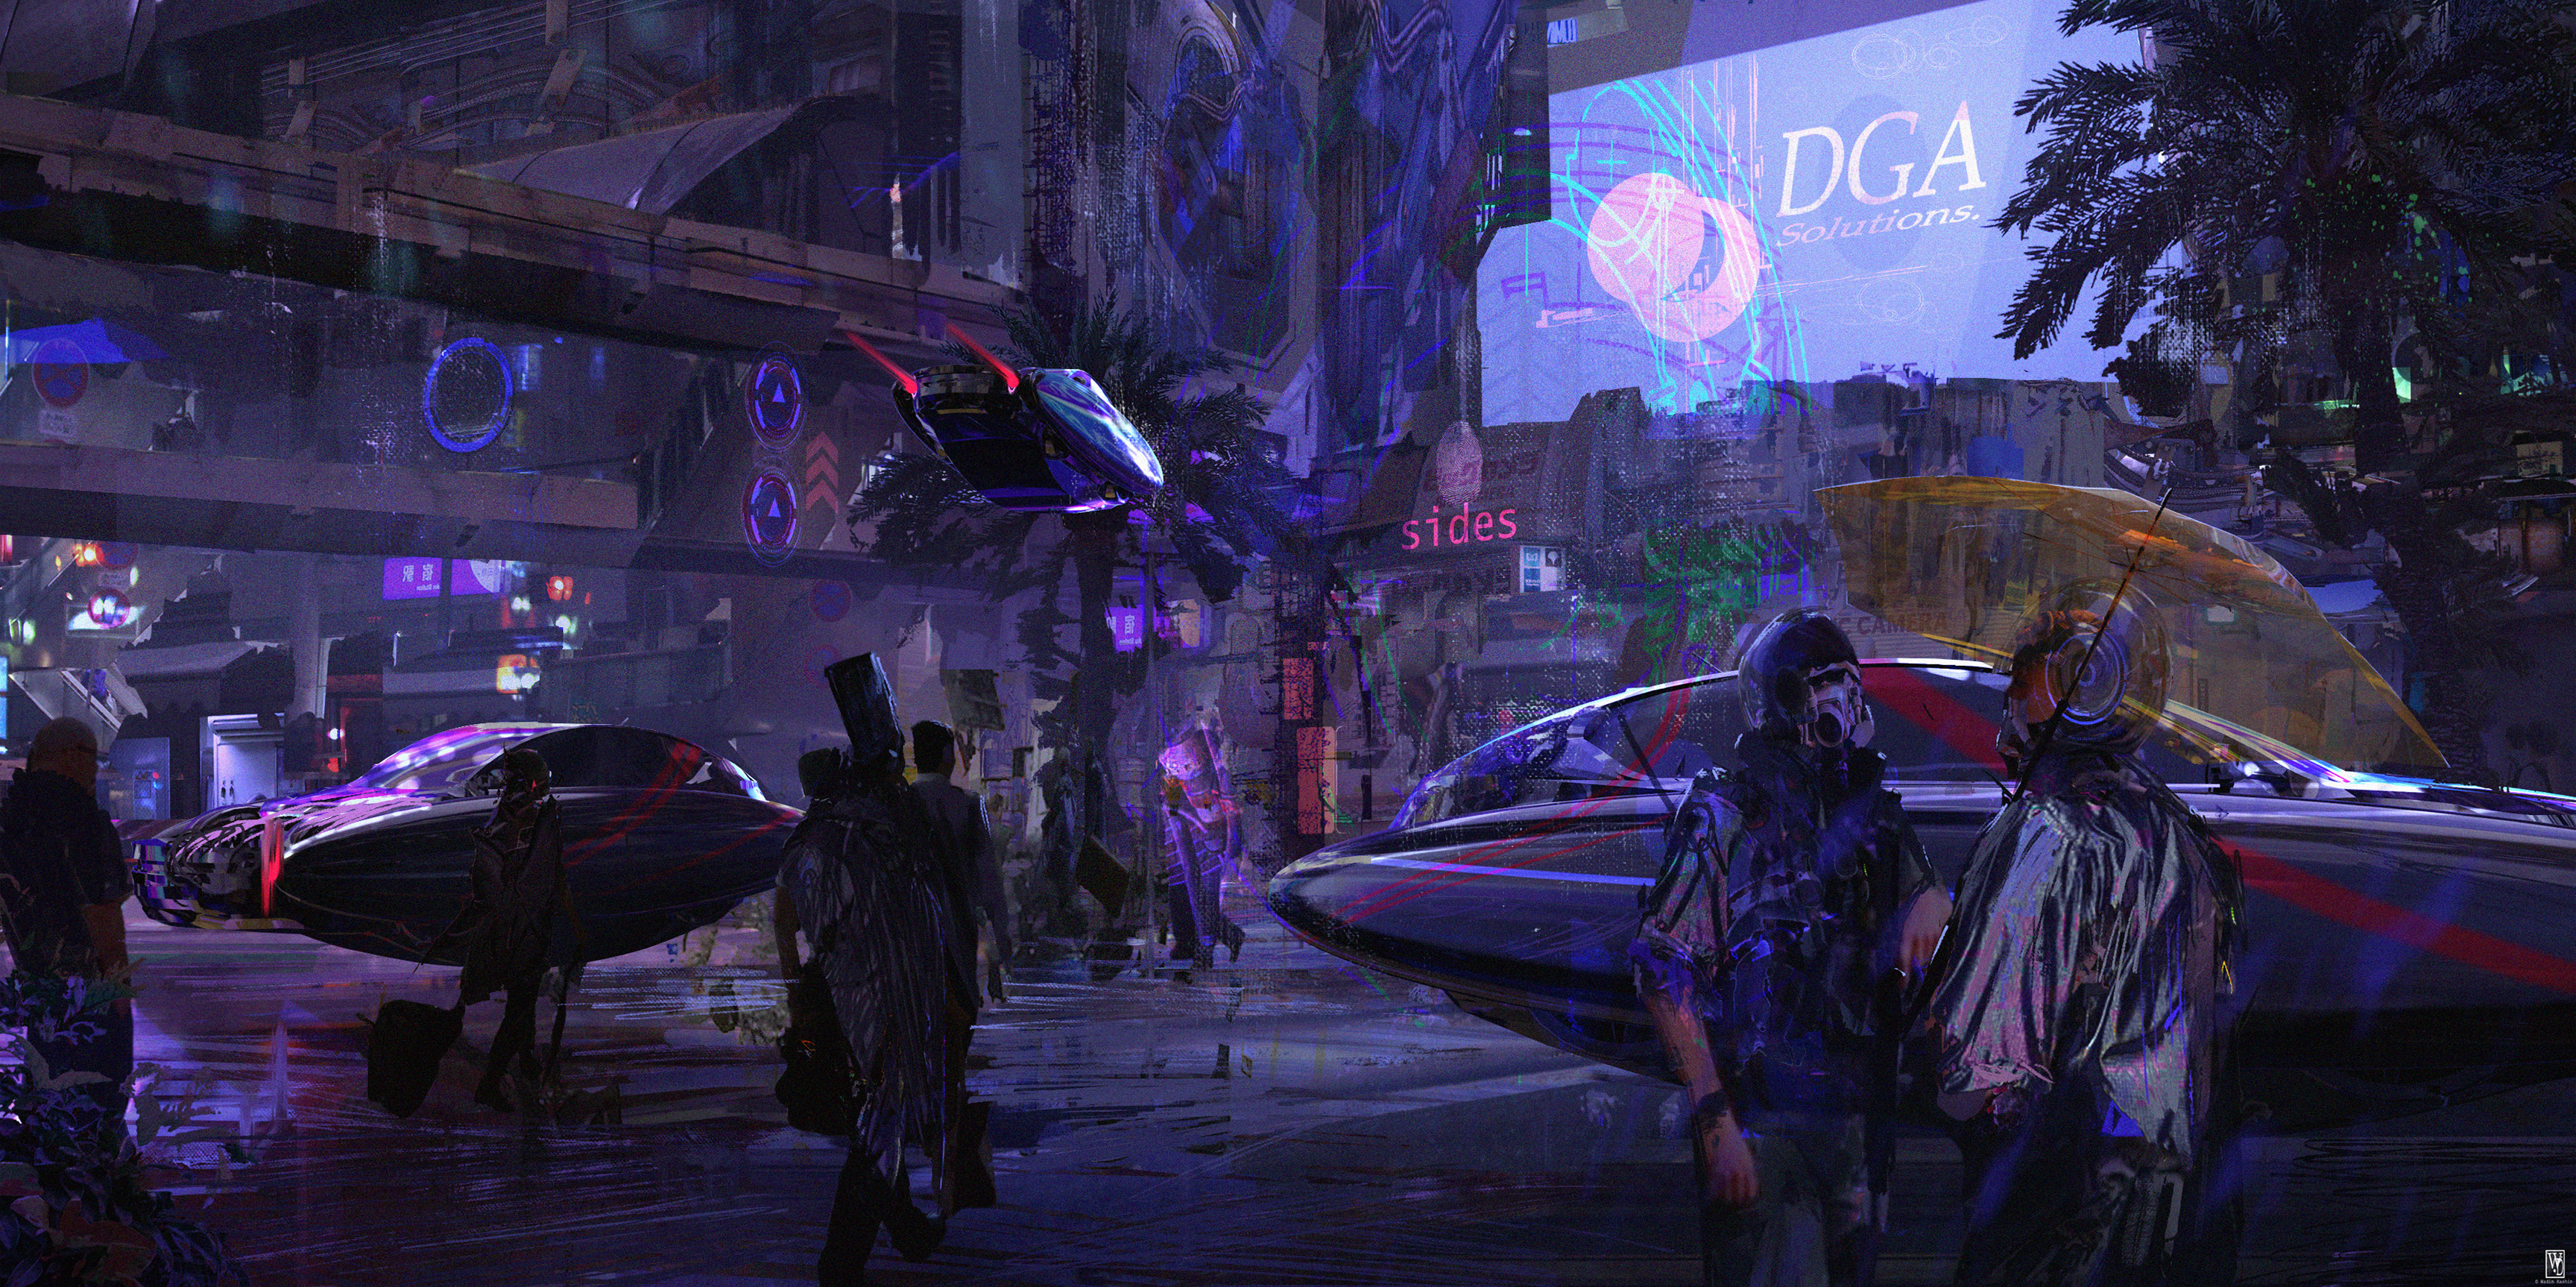 Cyberpunk Cityscape 4k, HD Artist, 4k Wallpapers, Images, Backgrounds